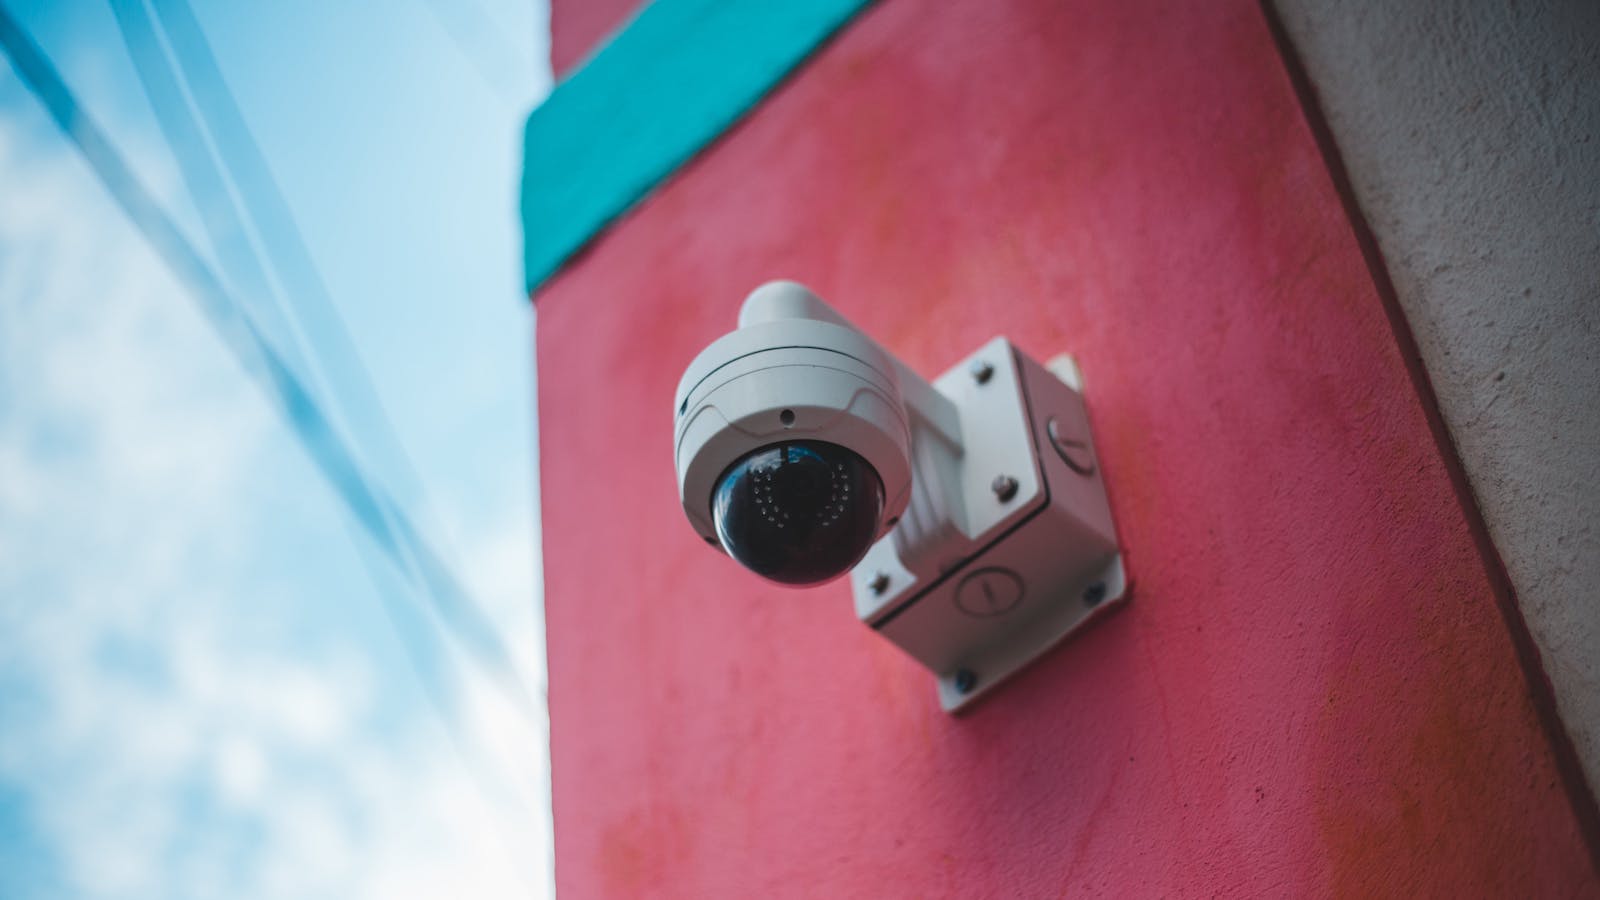 A Close-Up Shot of a Security Camera